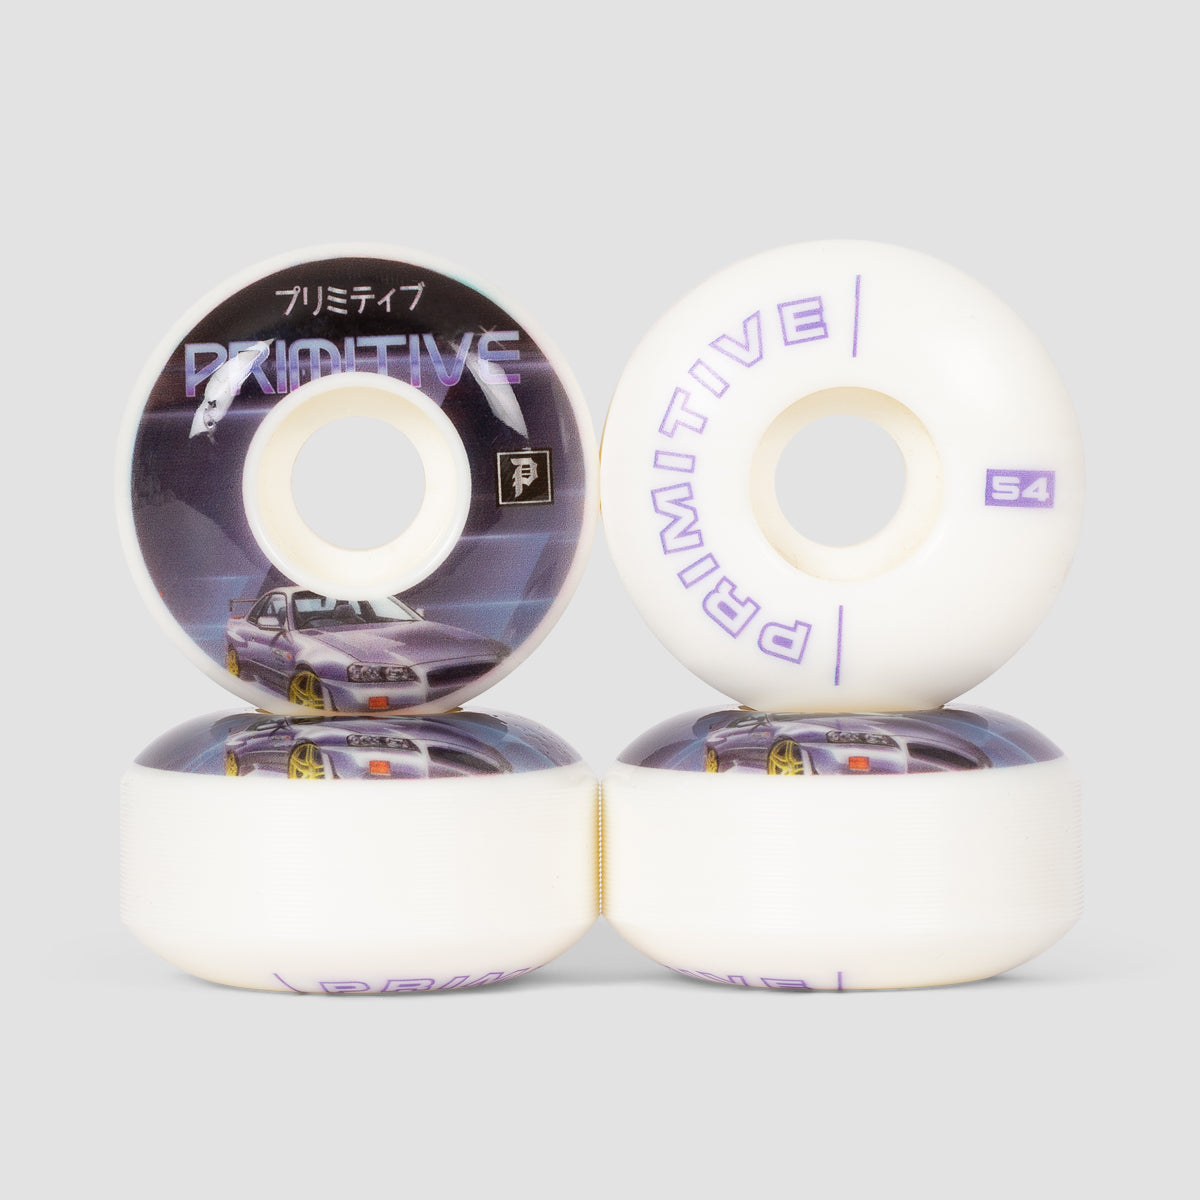 Primitive RPM Skateboard Wheels White 54mm